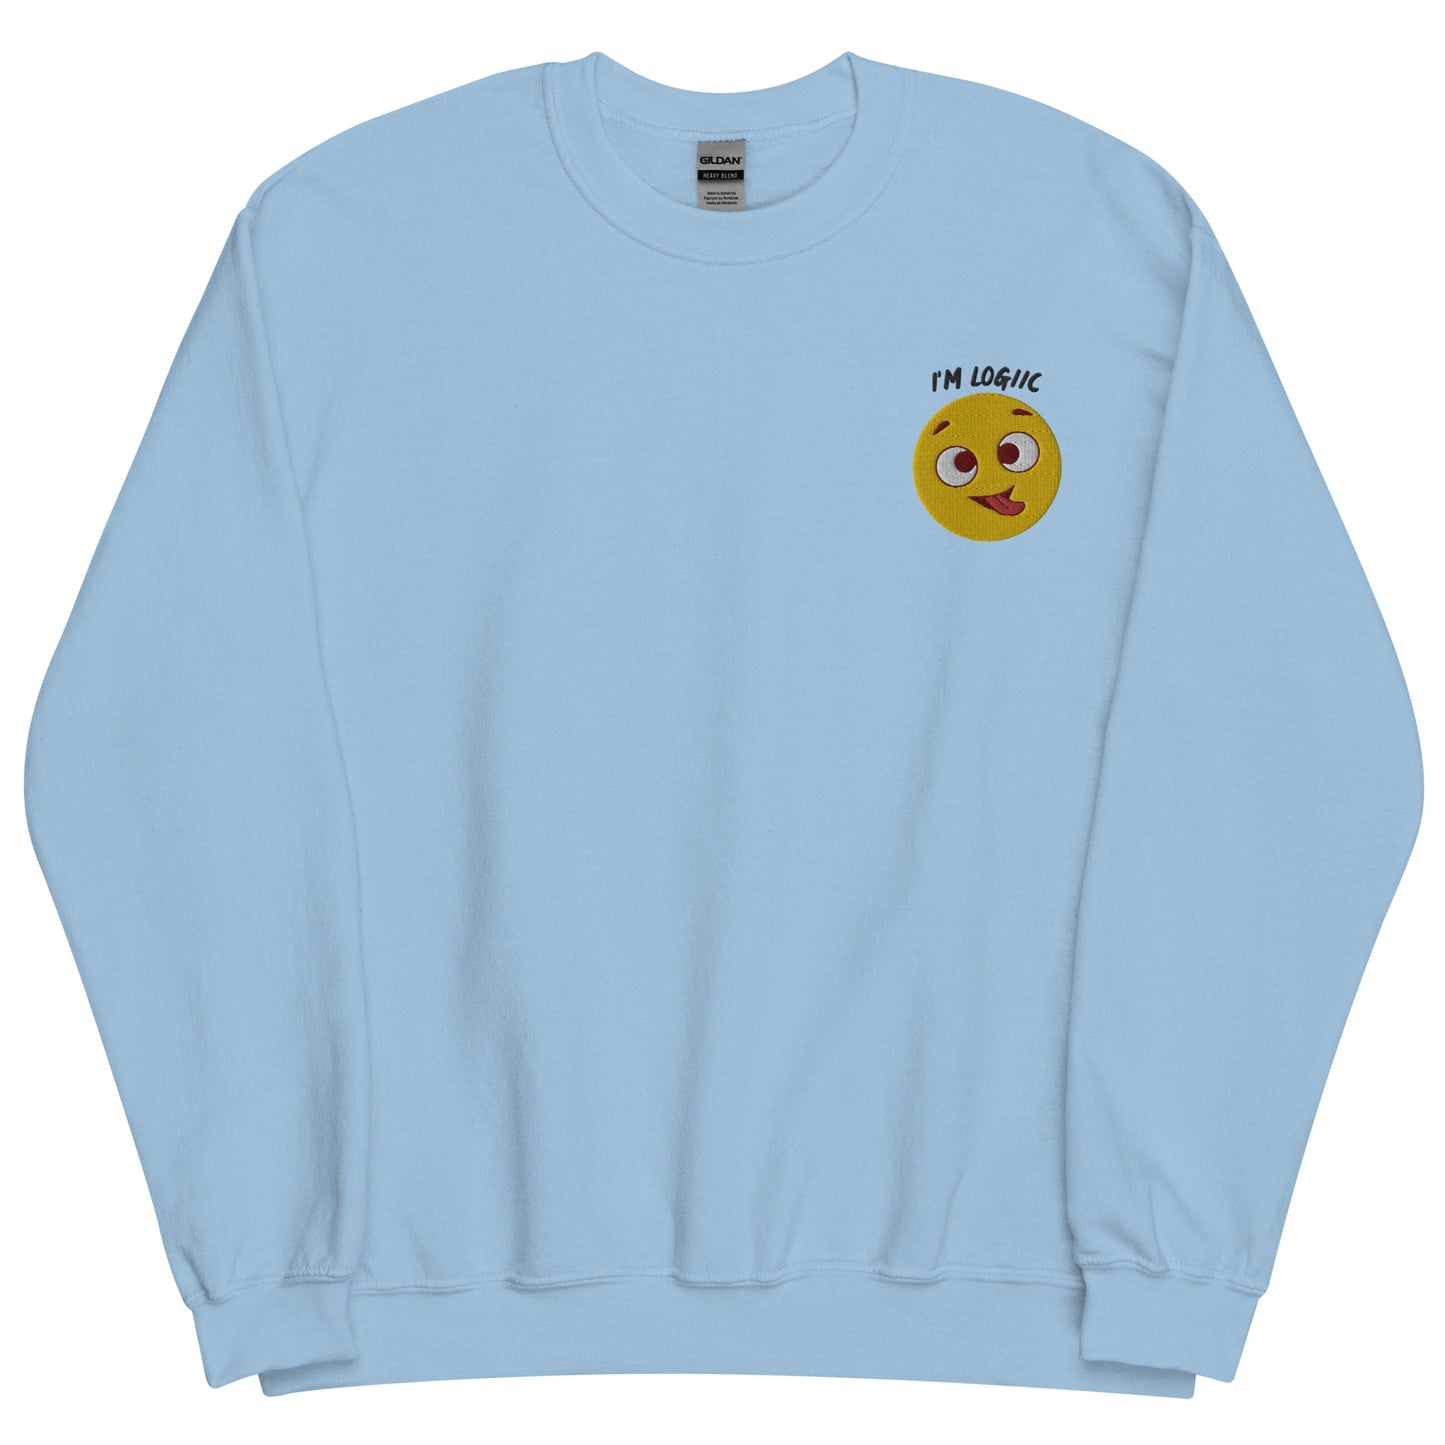 Silly Face Unisex Sweatshirt - Light Blue / S